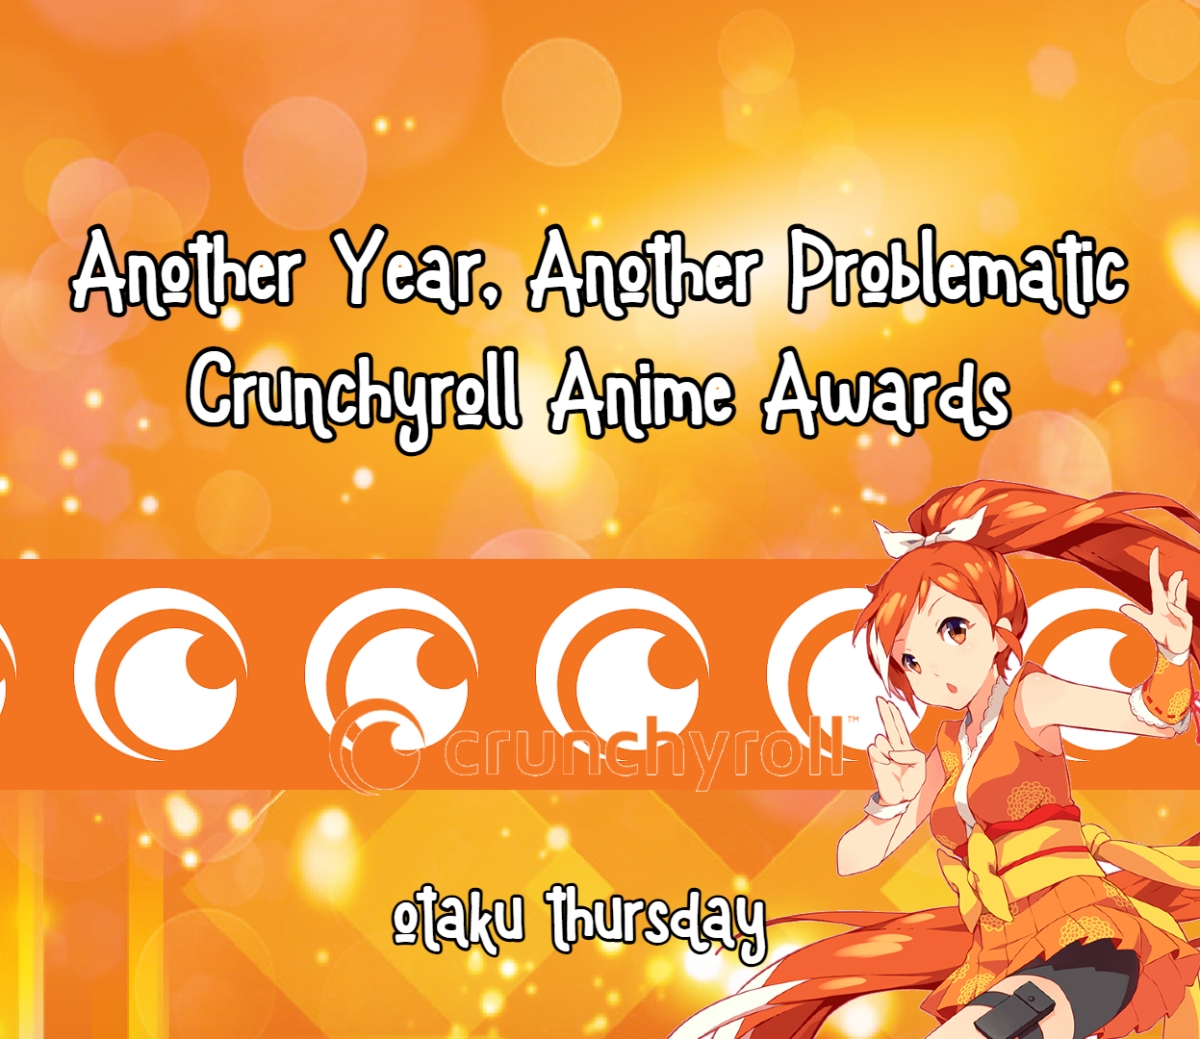 Crunchyroll Anime Awards 2022 Nominations Full List